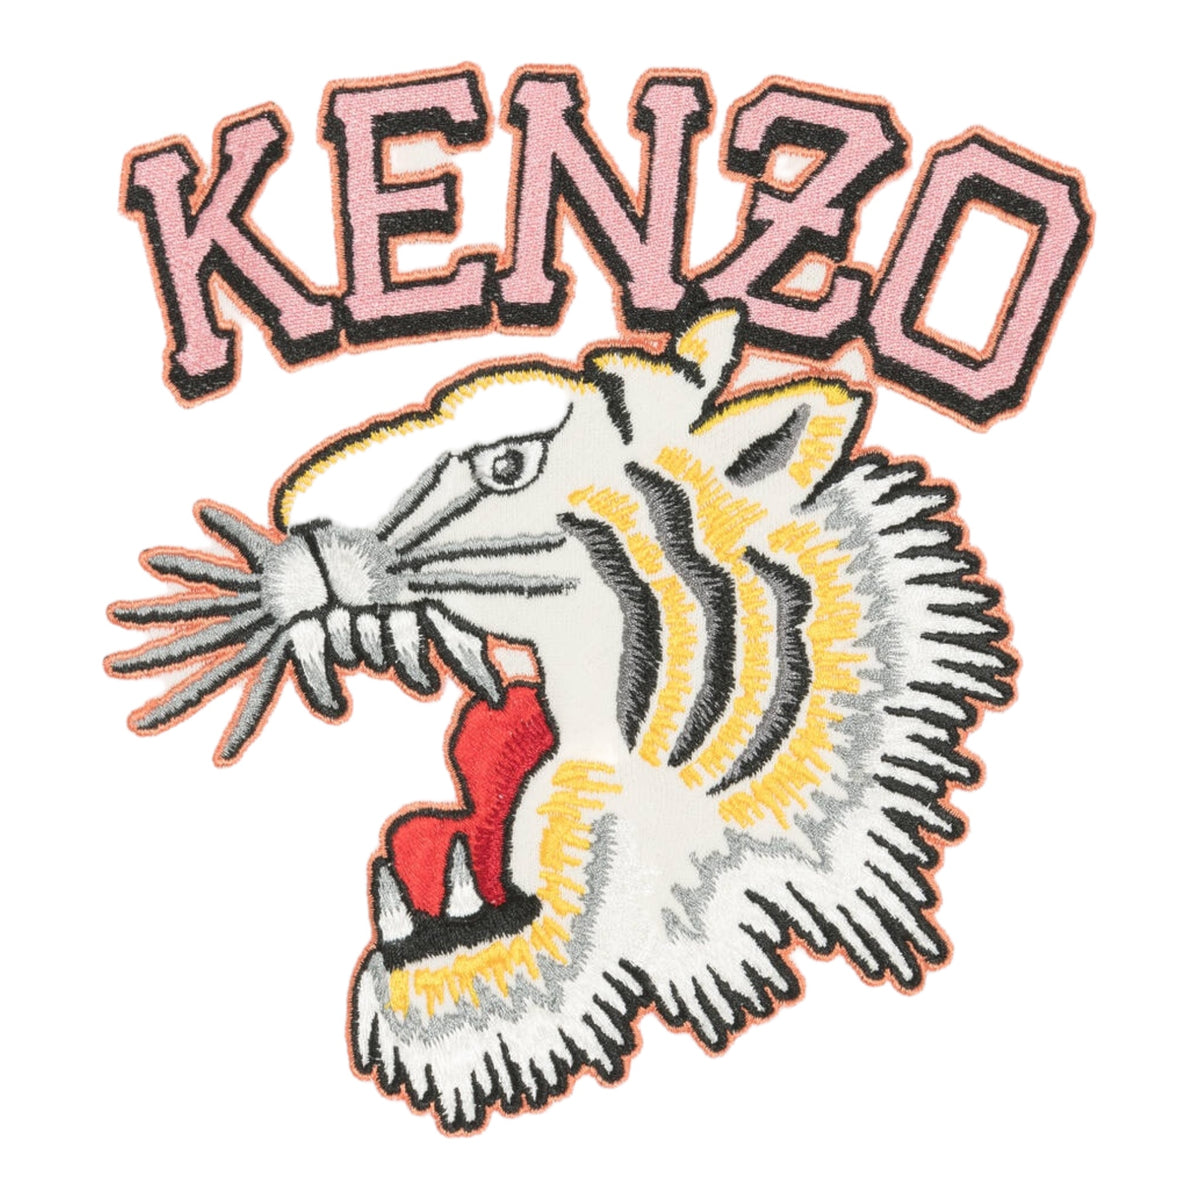 Kenzo Kids Varsity Tiger Fleece Sweatshirt